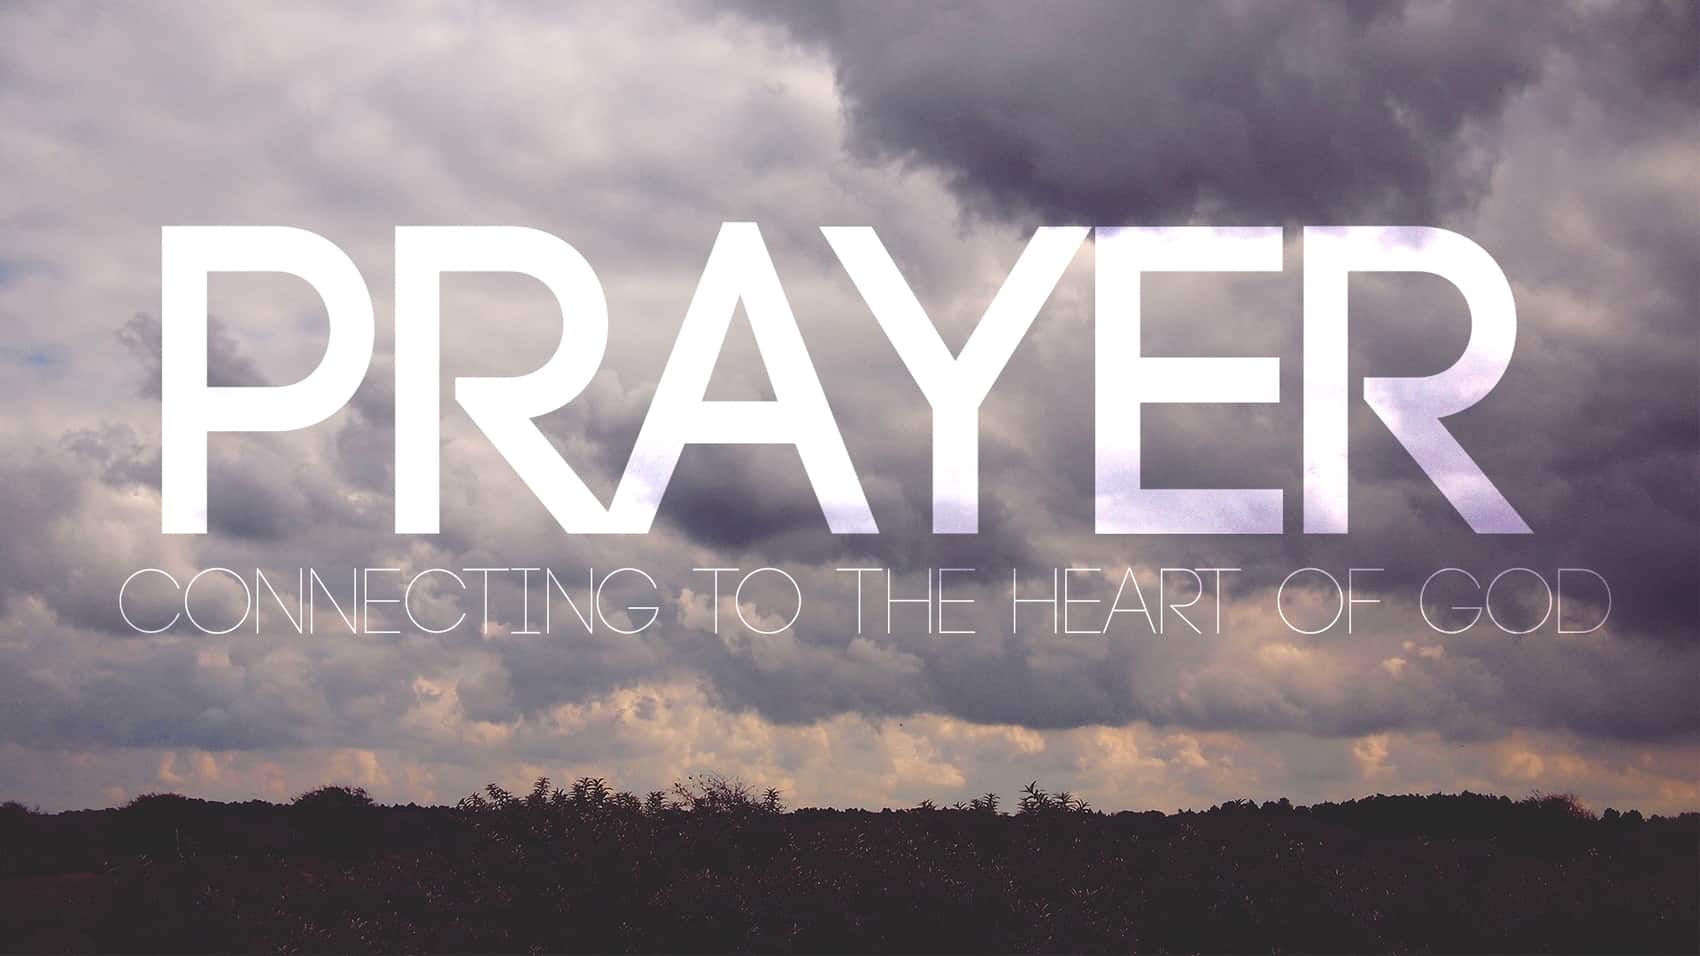 A Call to Pray